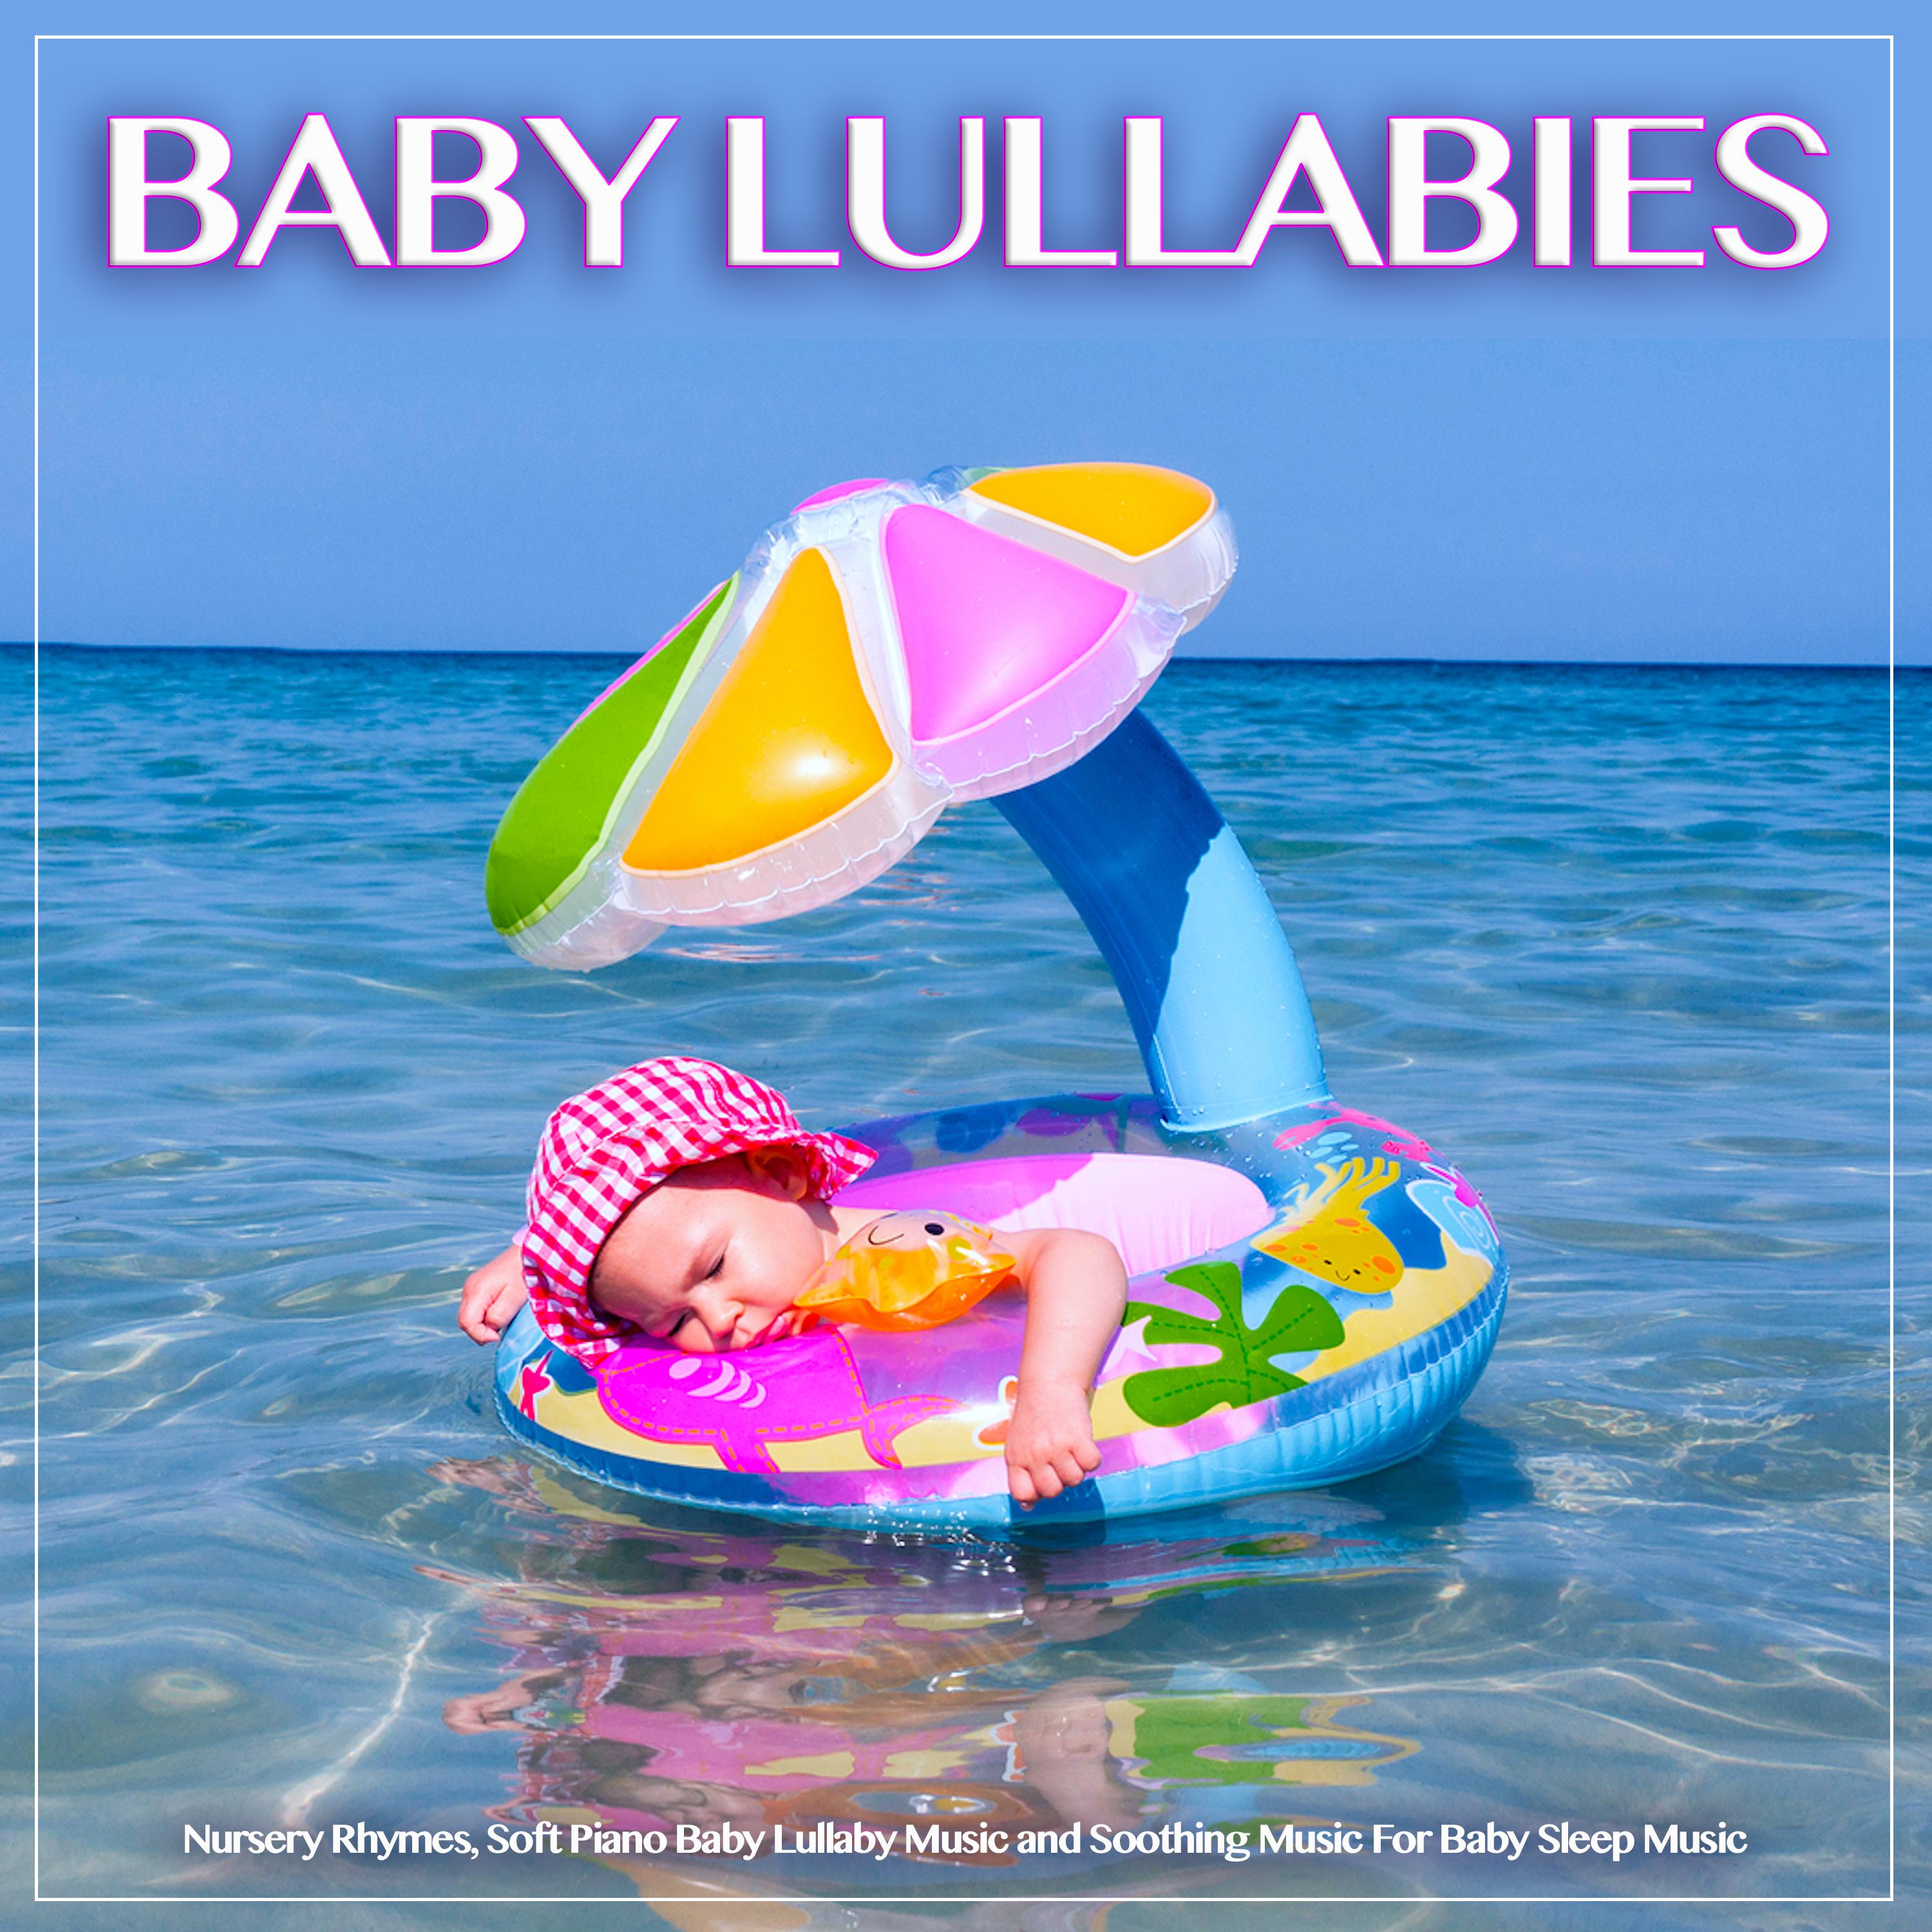 Row Row Row Your Boat - Soft Piano - Baby Lullaby - Nursery Rhymes - Baby Lullabies - Baby Sleep Music